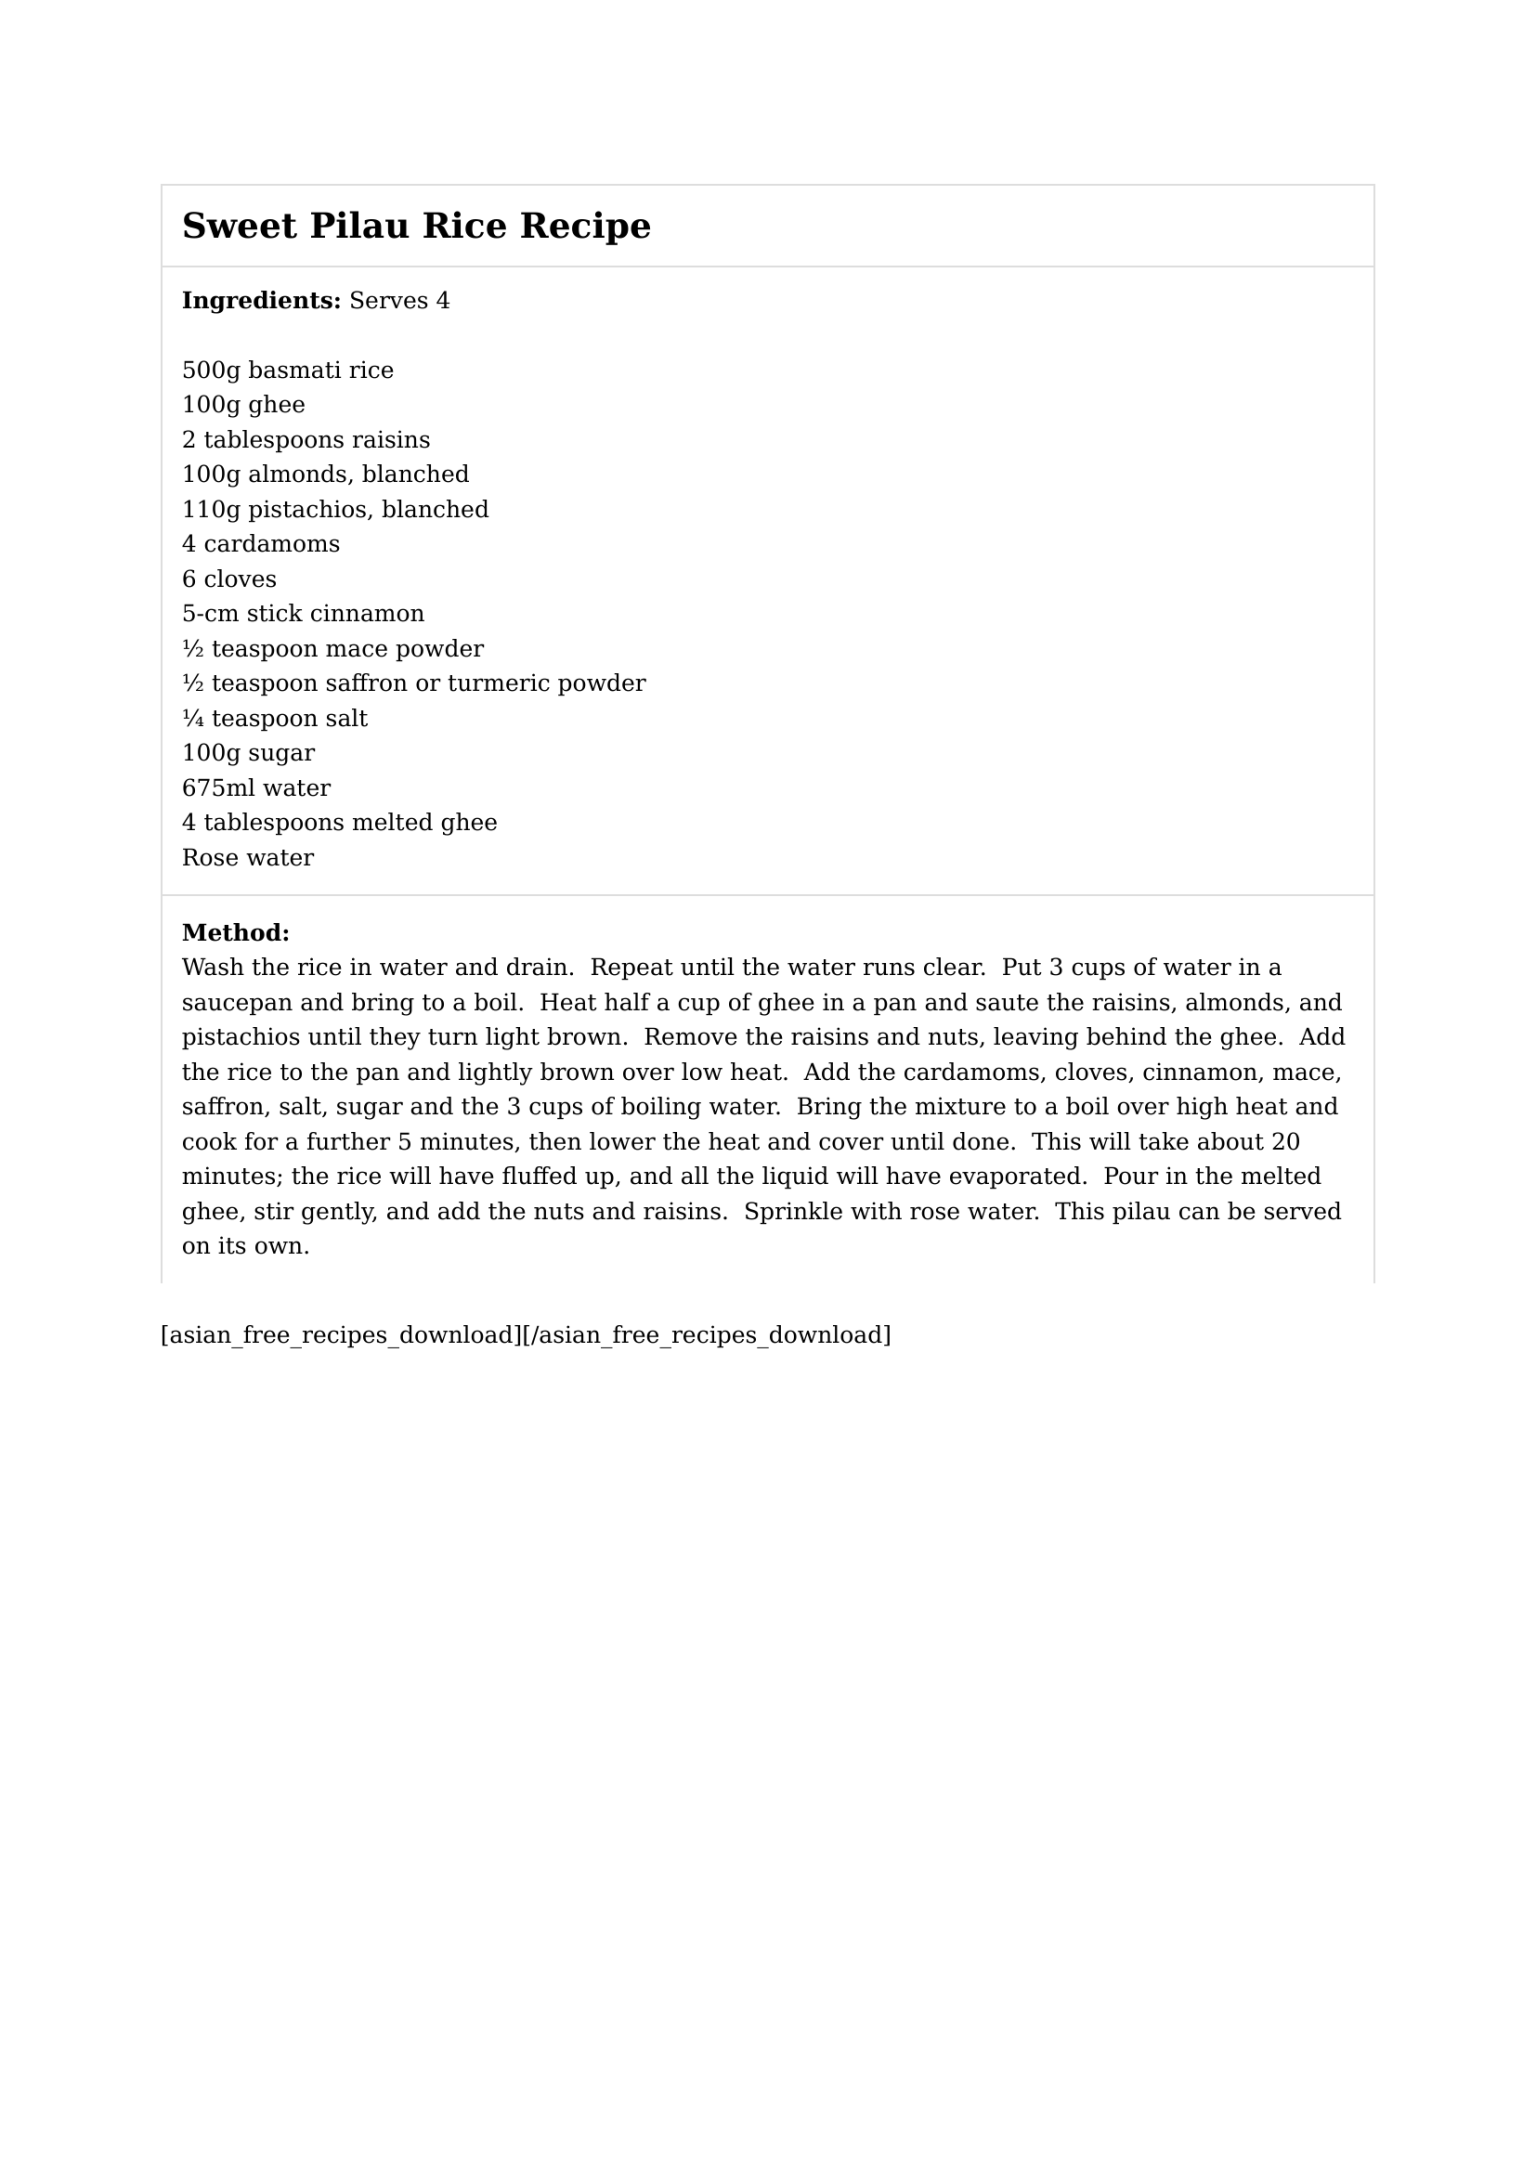 Sweet Pilau Rice Recipe